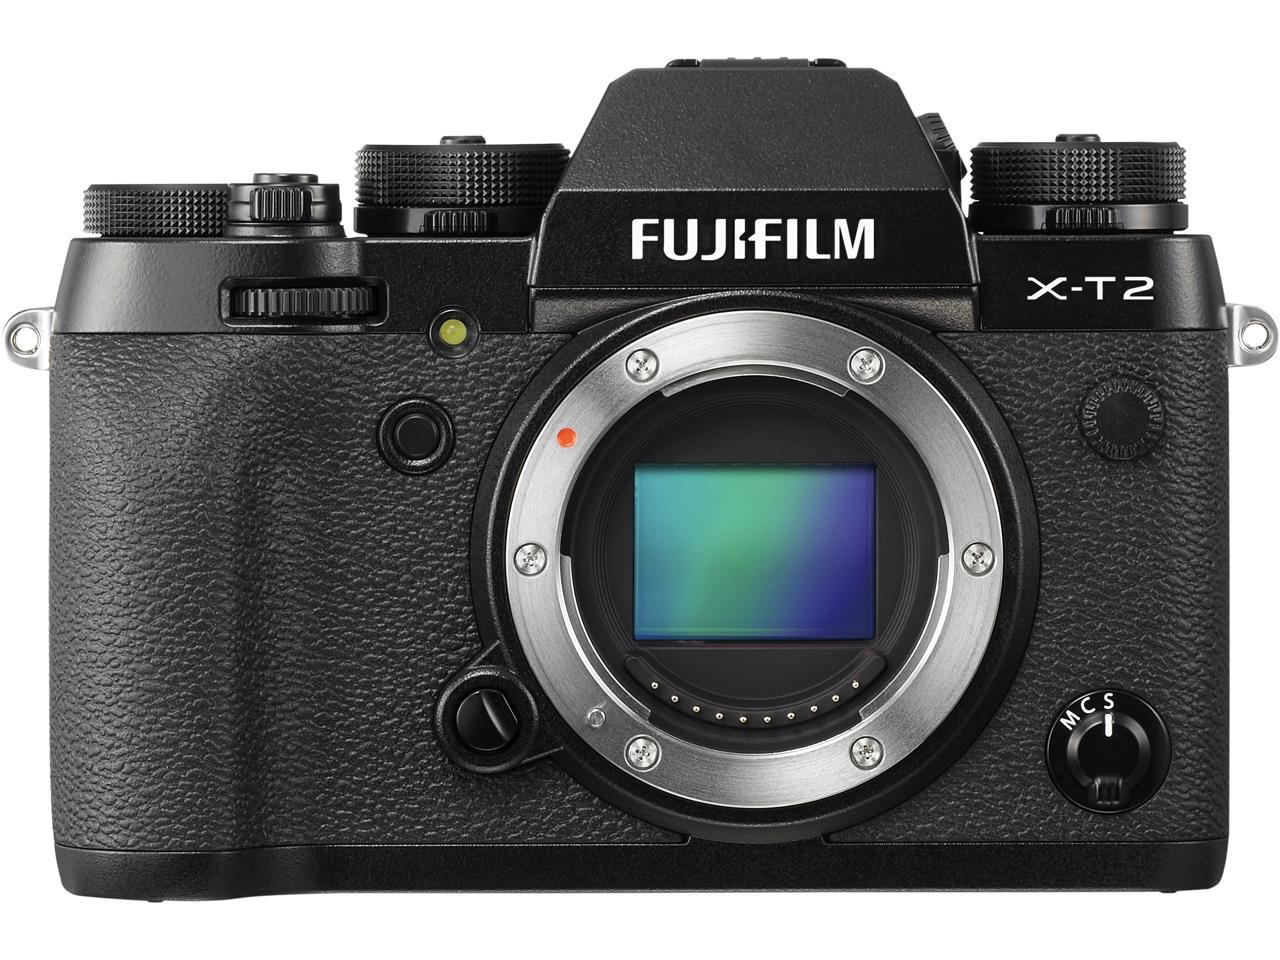 FUJIFILM X-T2 16519247 Black Compact Mirrorless System Camera Body